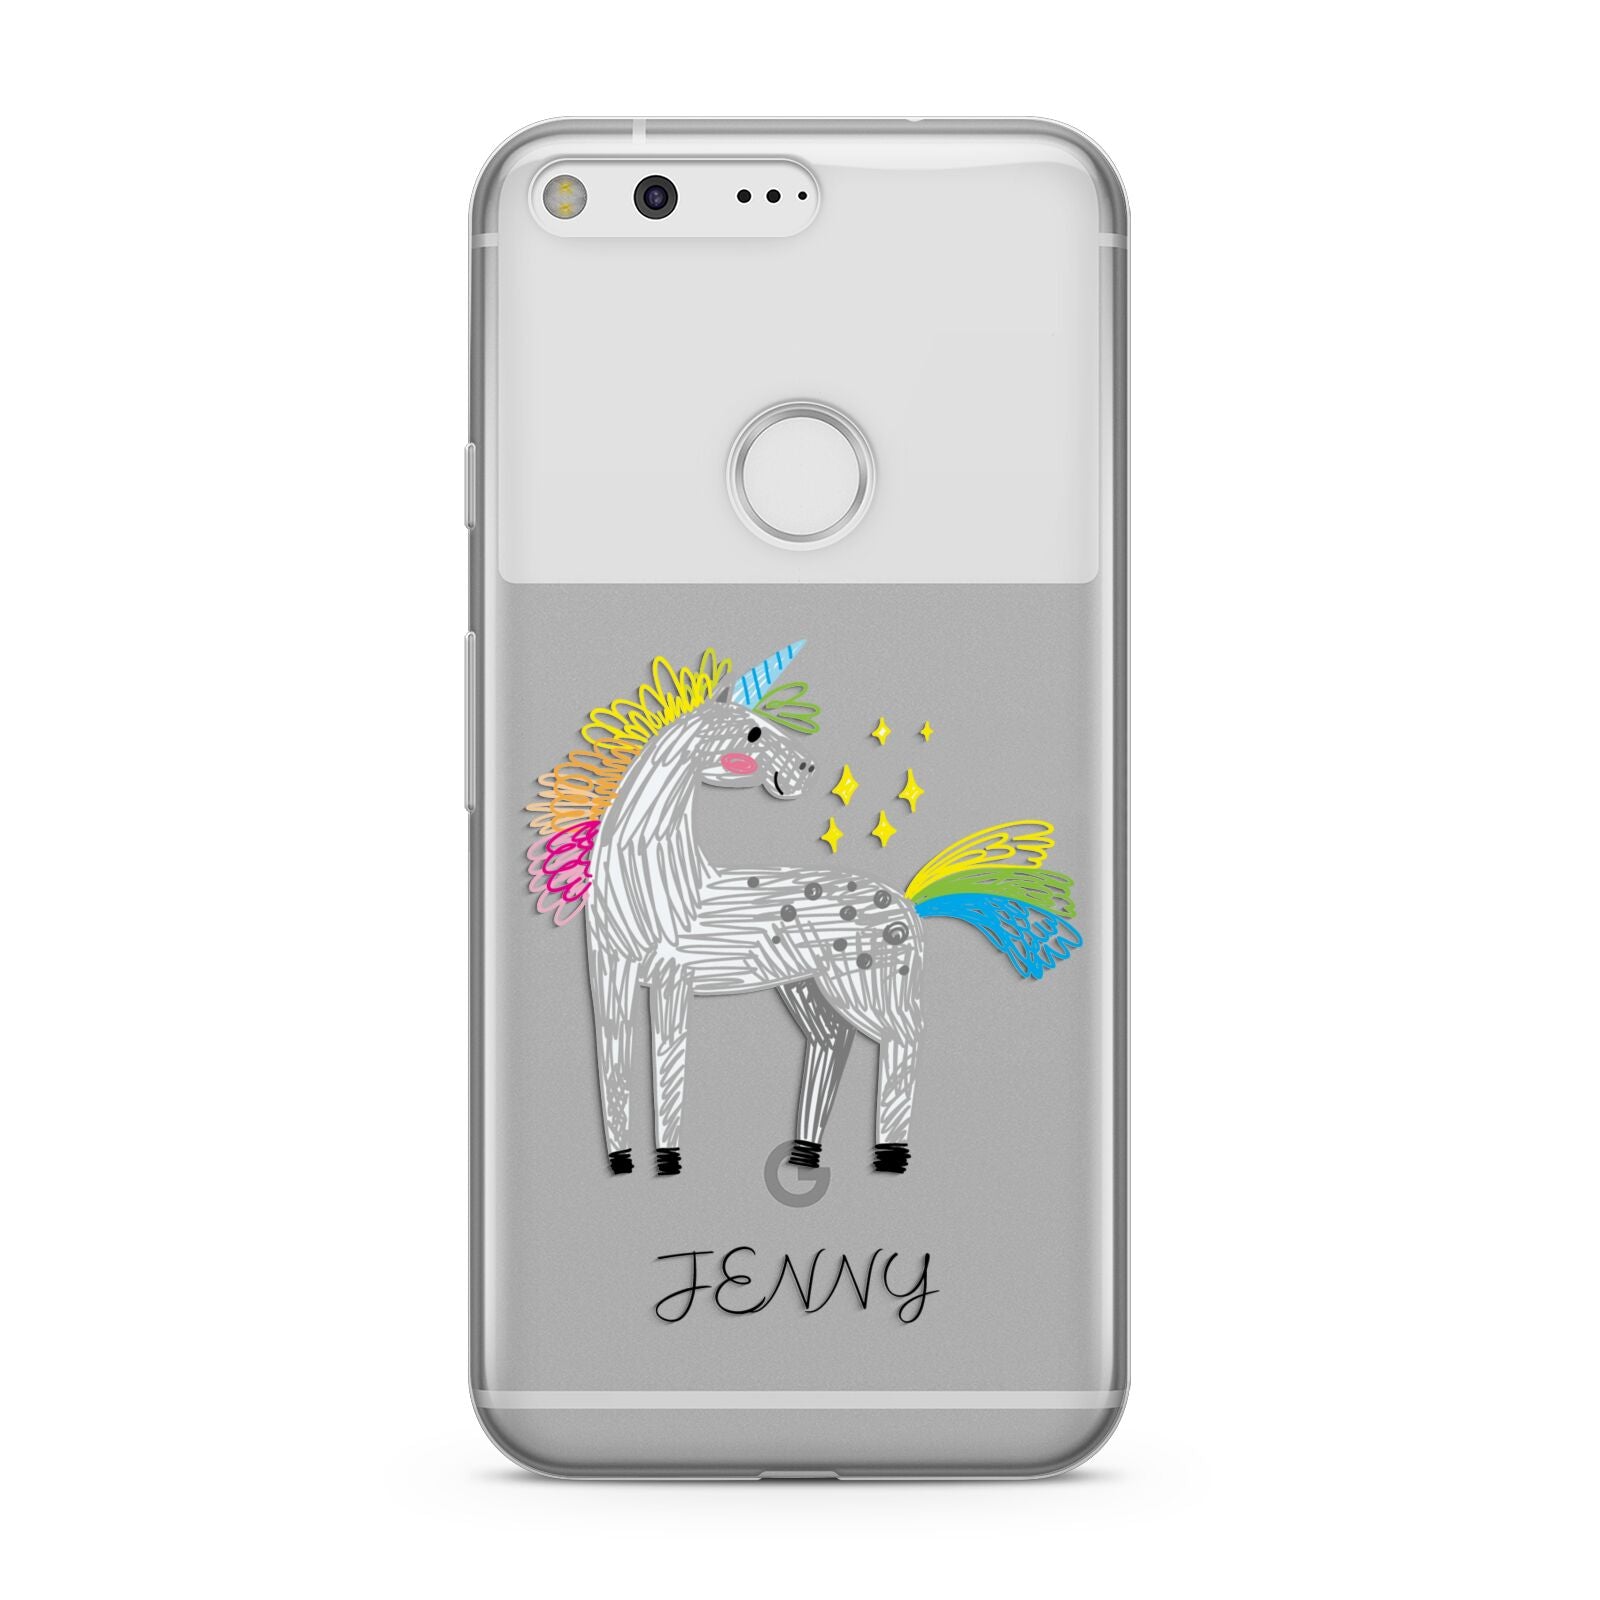 Custom Unicorn Google Pixel Case